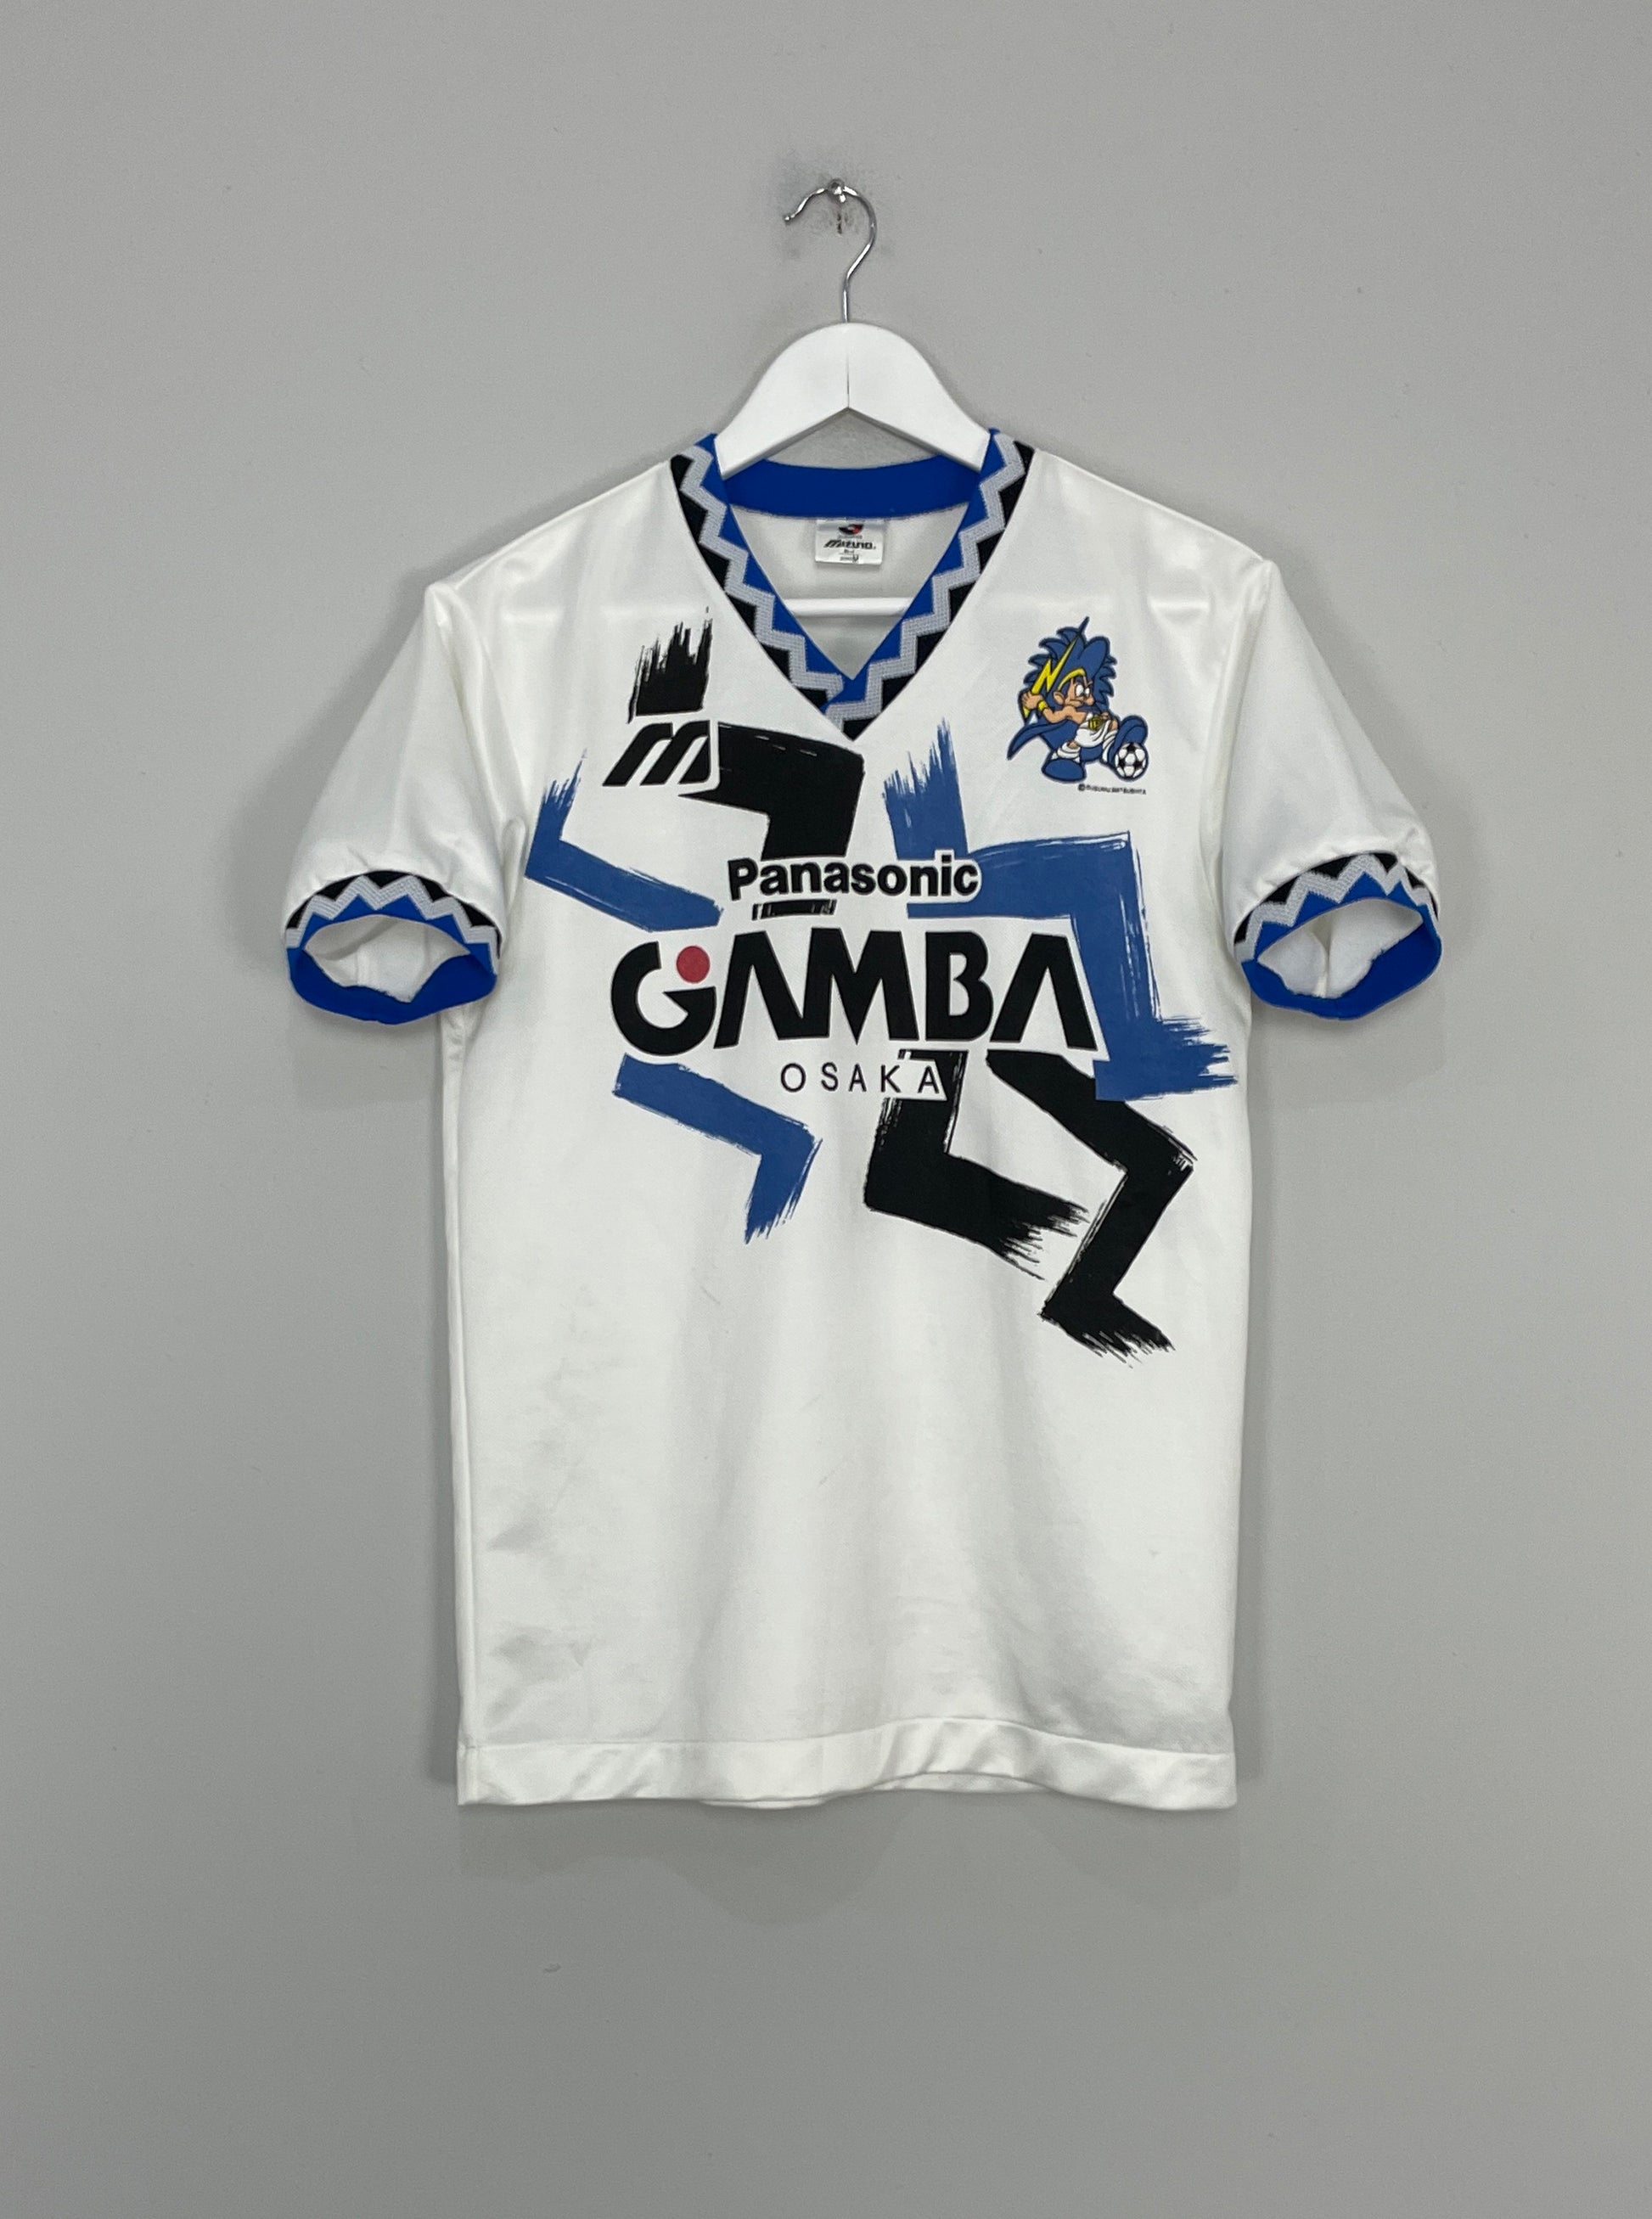 Image of the Gamba Osaka shirt from the 1993/95 season